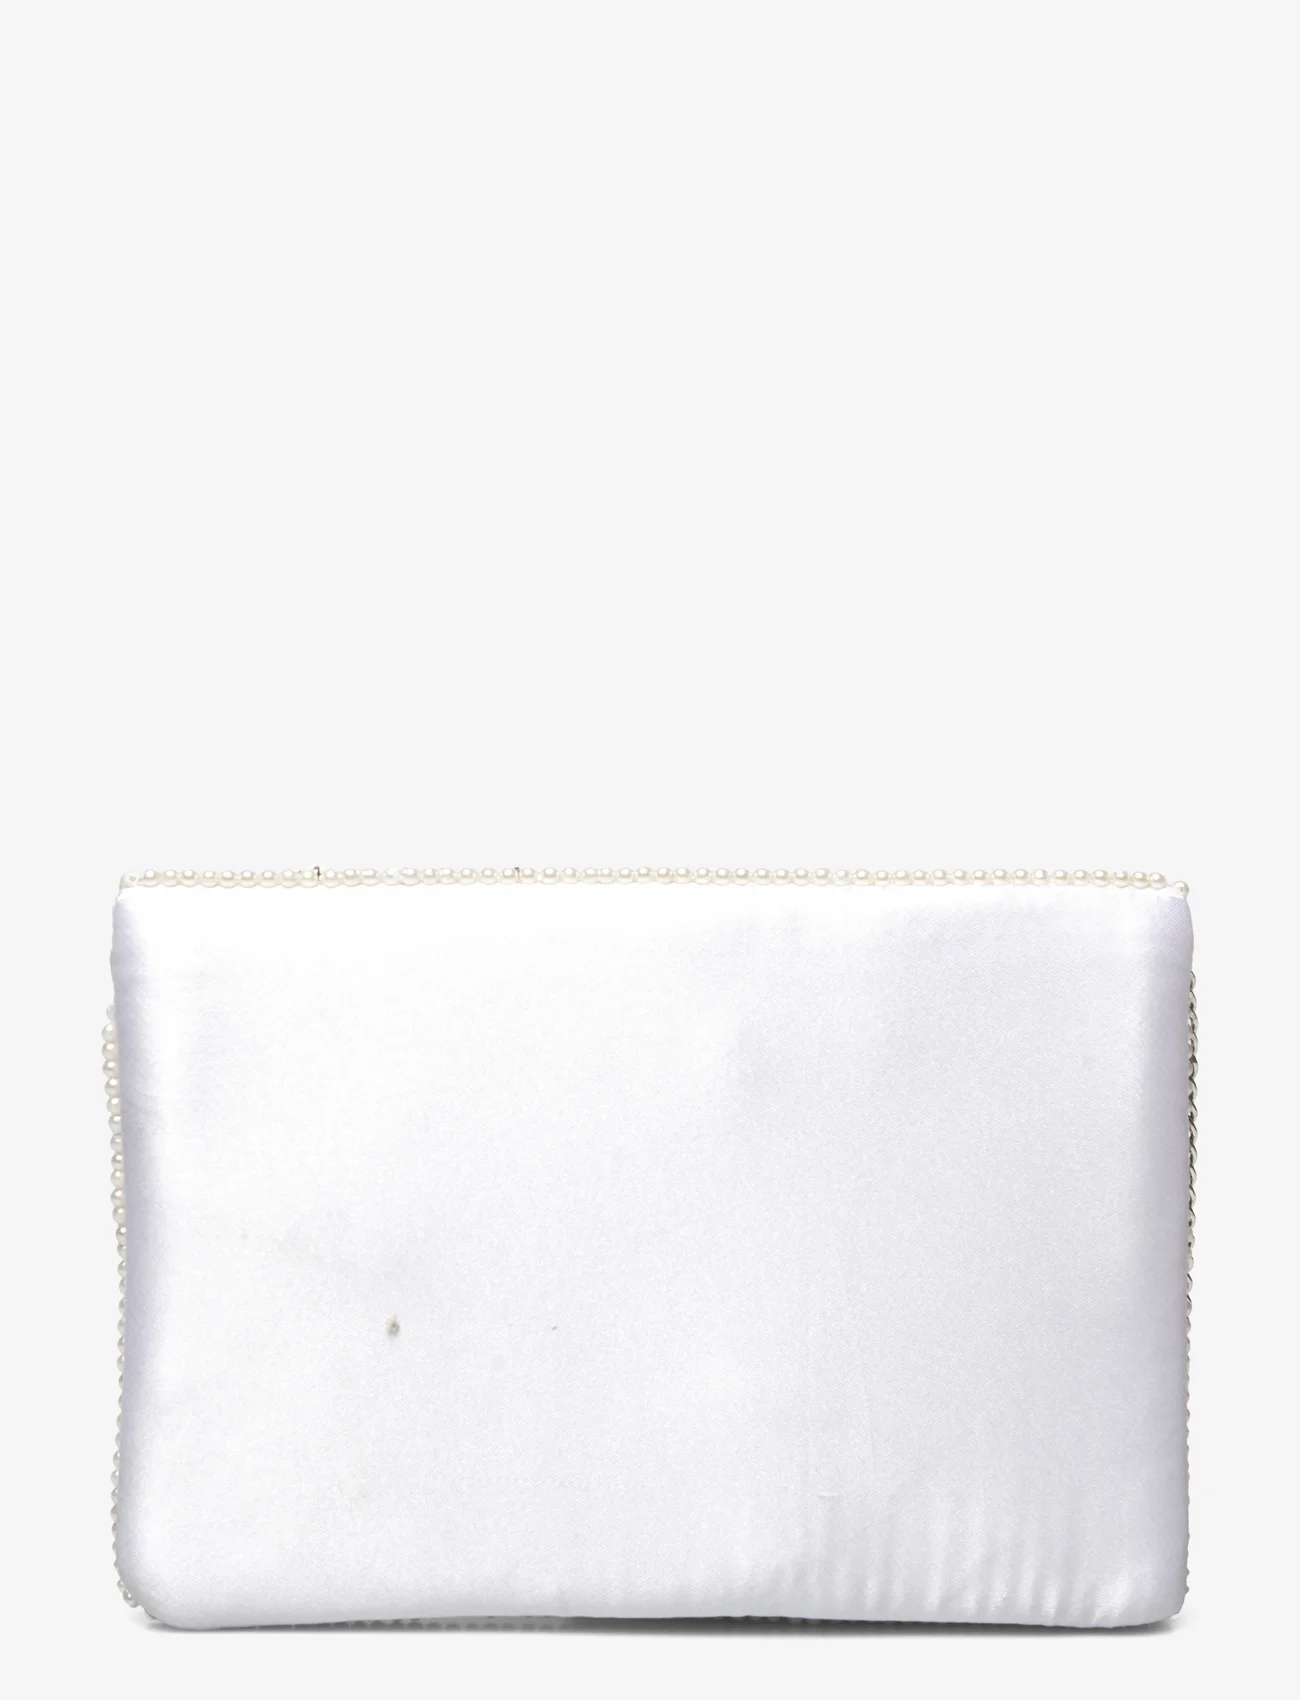 Pipol's Bazaar - Amorella Clutch White - feestelijke kleding voor outlet-prijzen - white - 1